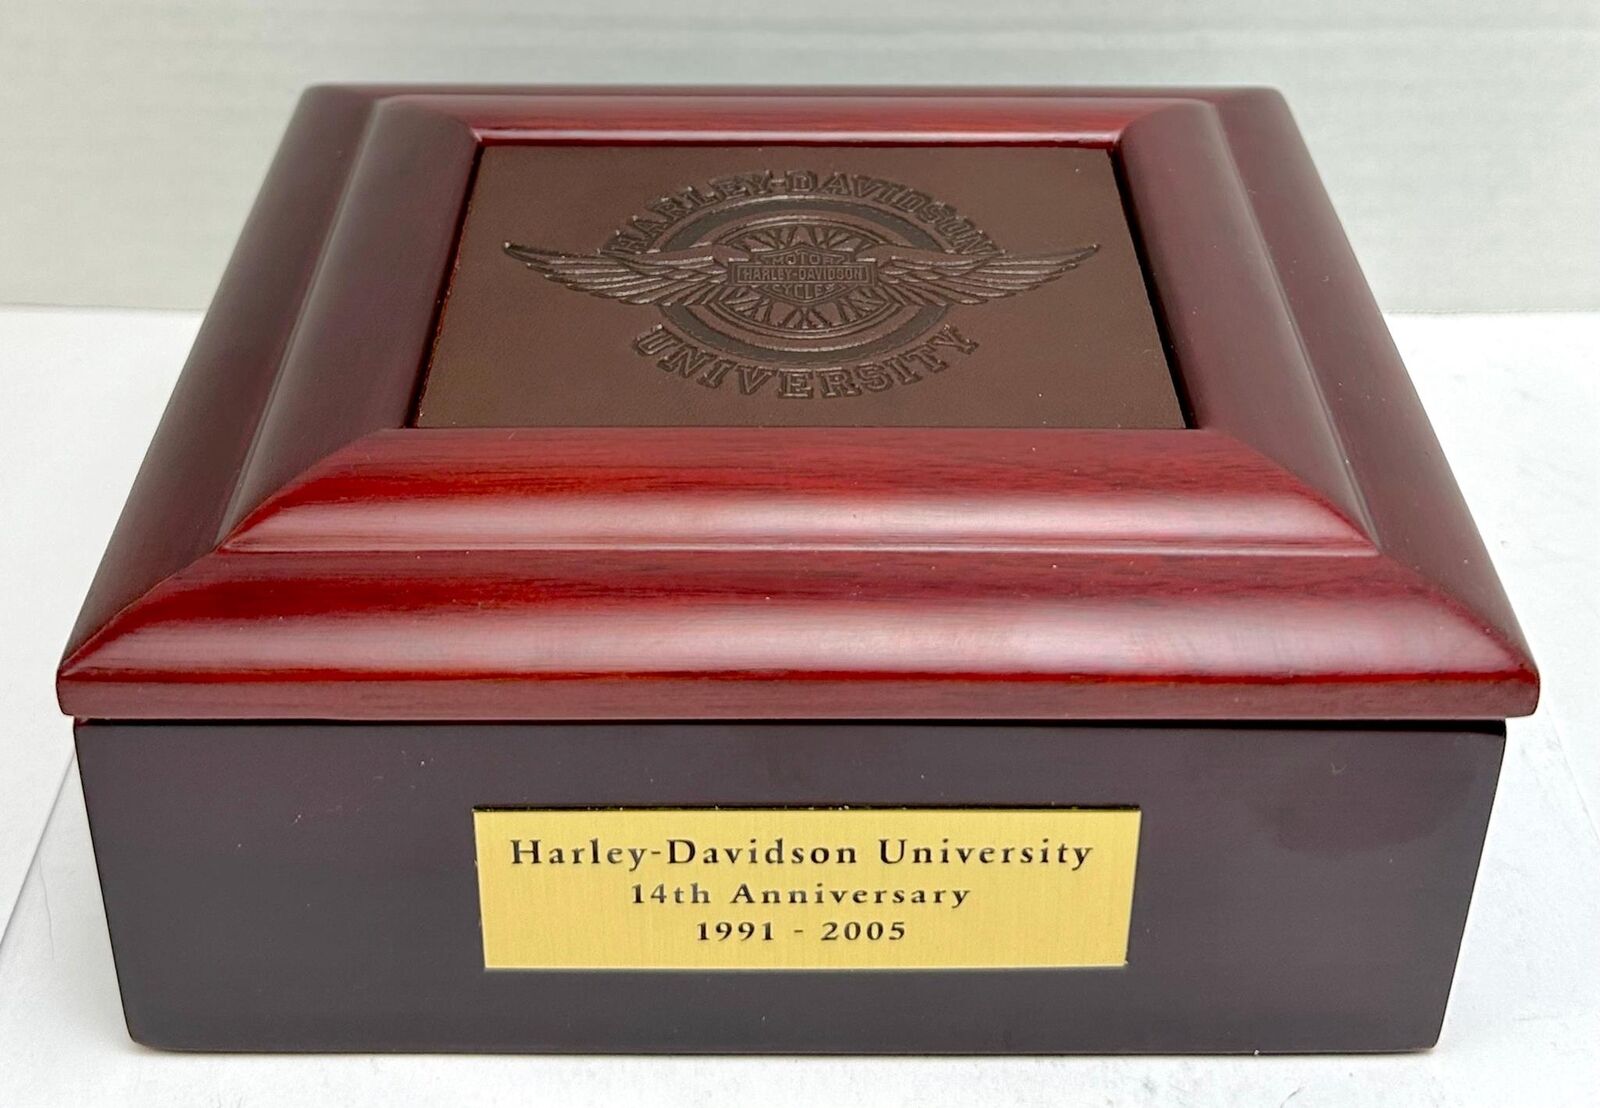 2005 Harley Davidson University 14th Anniversary Wooden Storage Desk Box